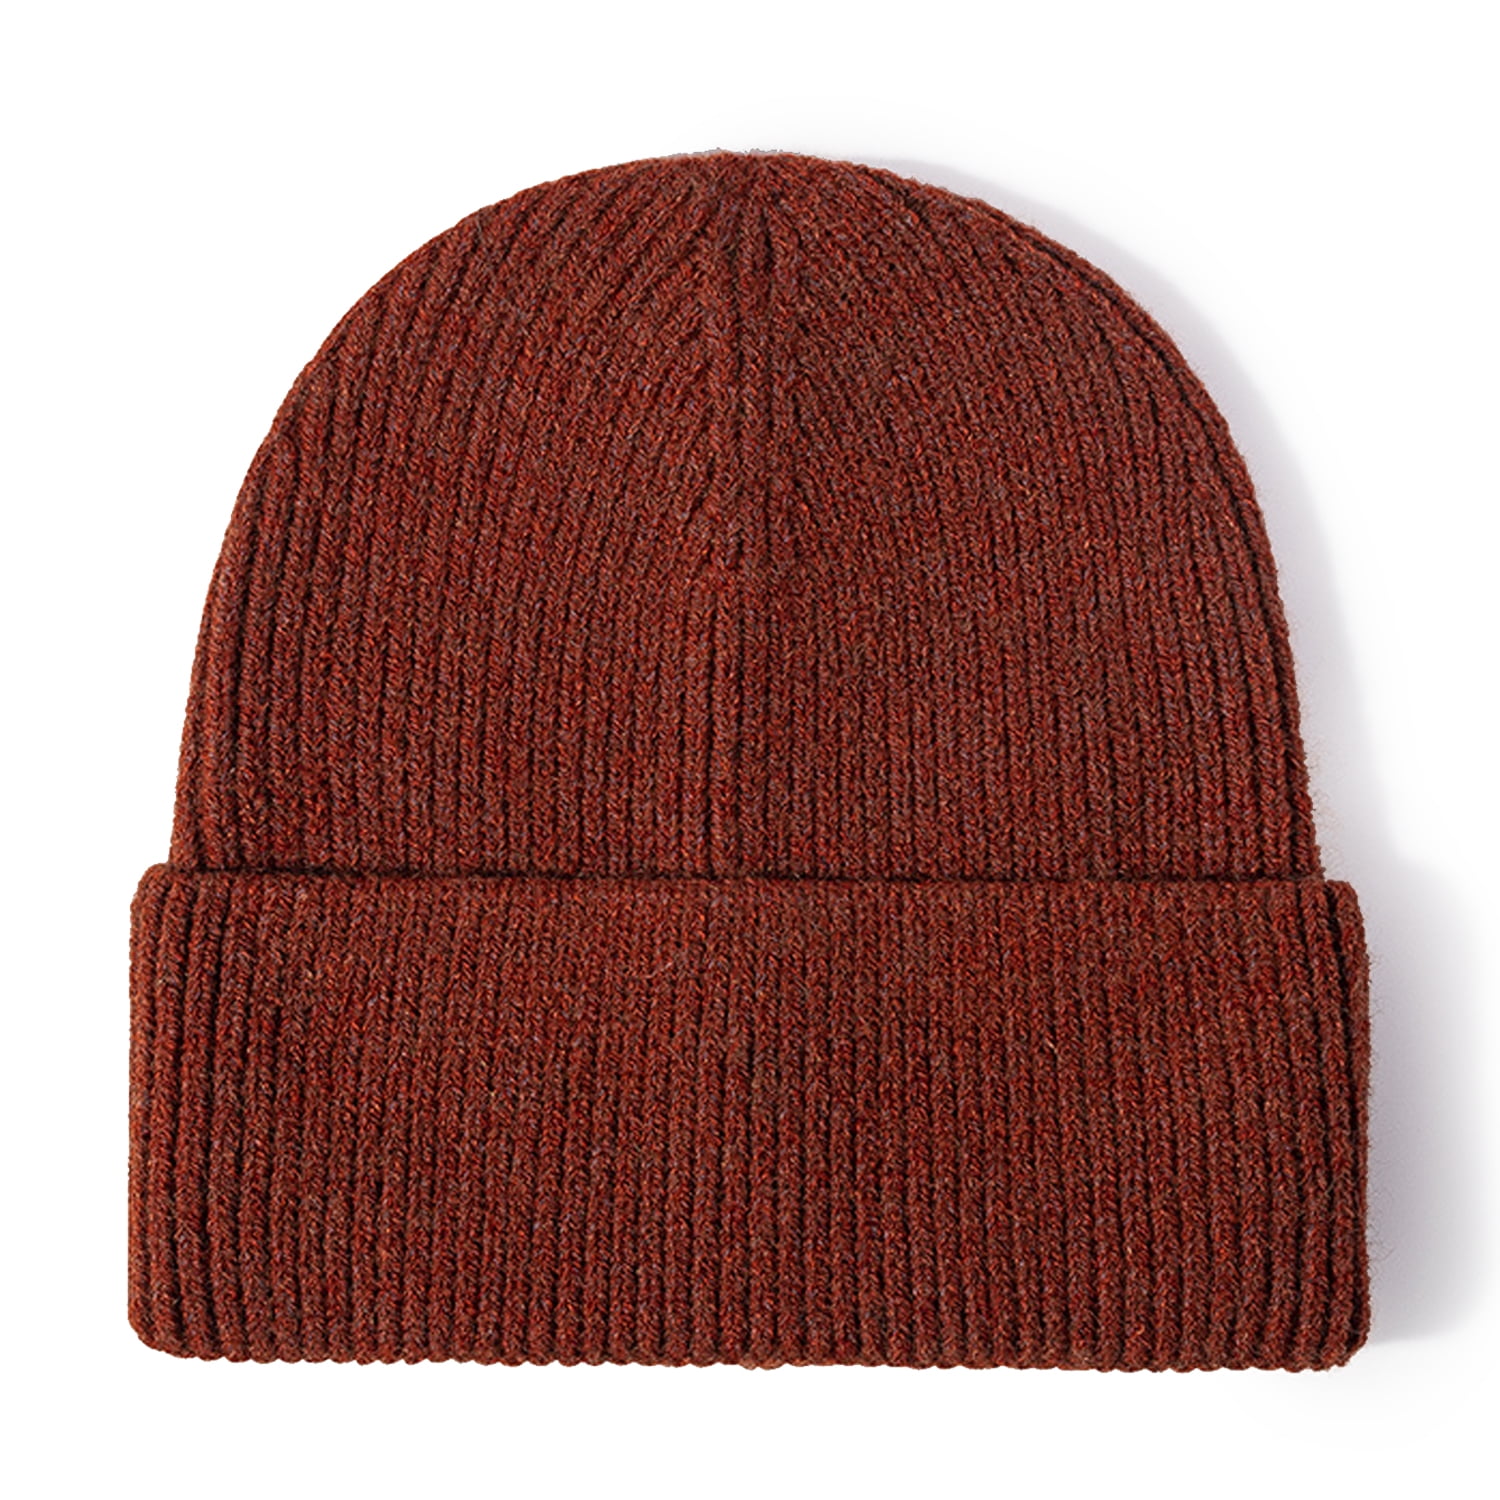 Women Men Hats Winter Warm Hat Knit Slouchy Beanie Plain Cap Ski Caps Skull Cuff 